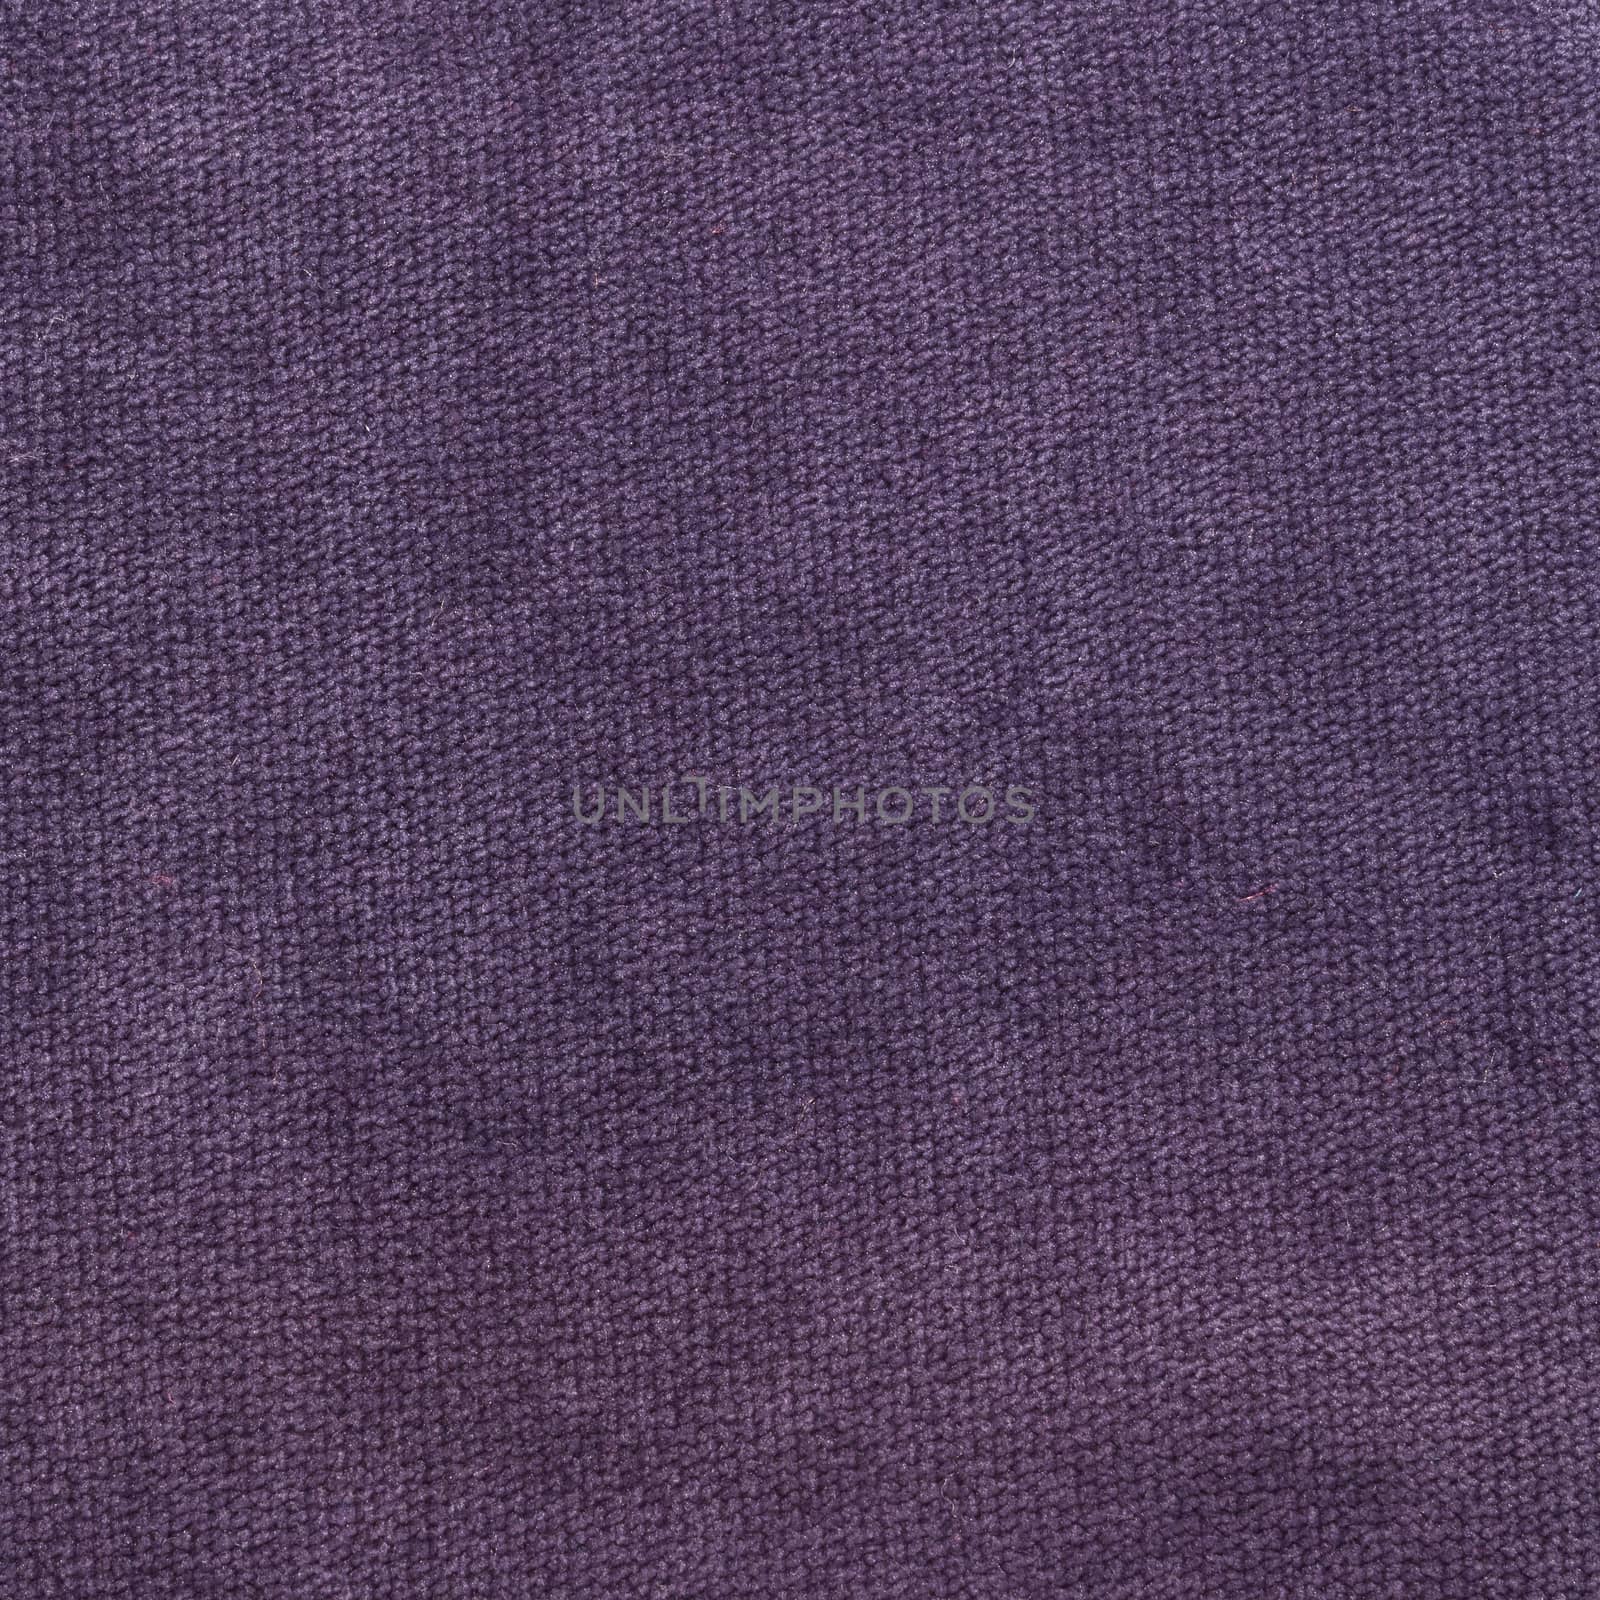 Velvet fabric texture by alanstix64